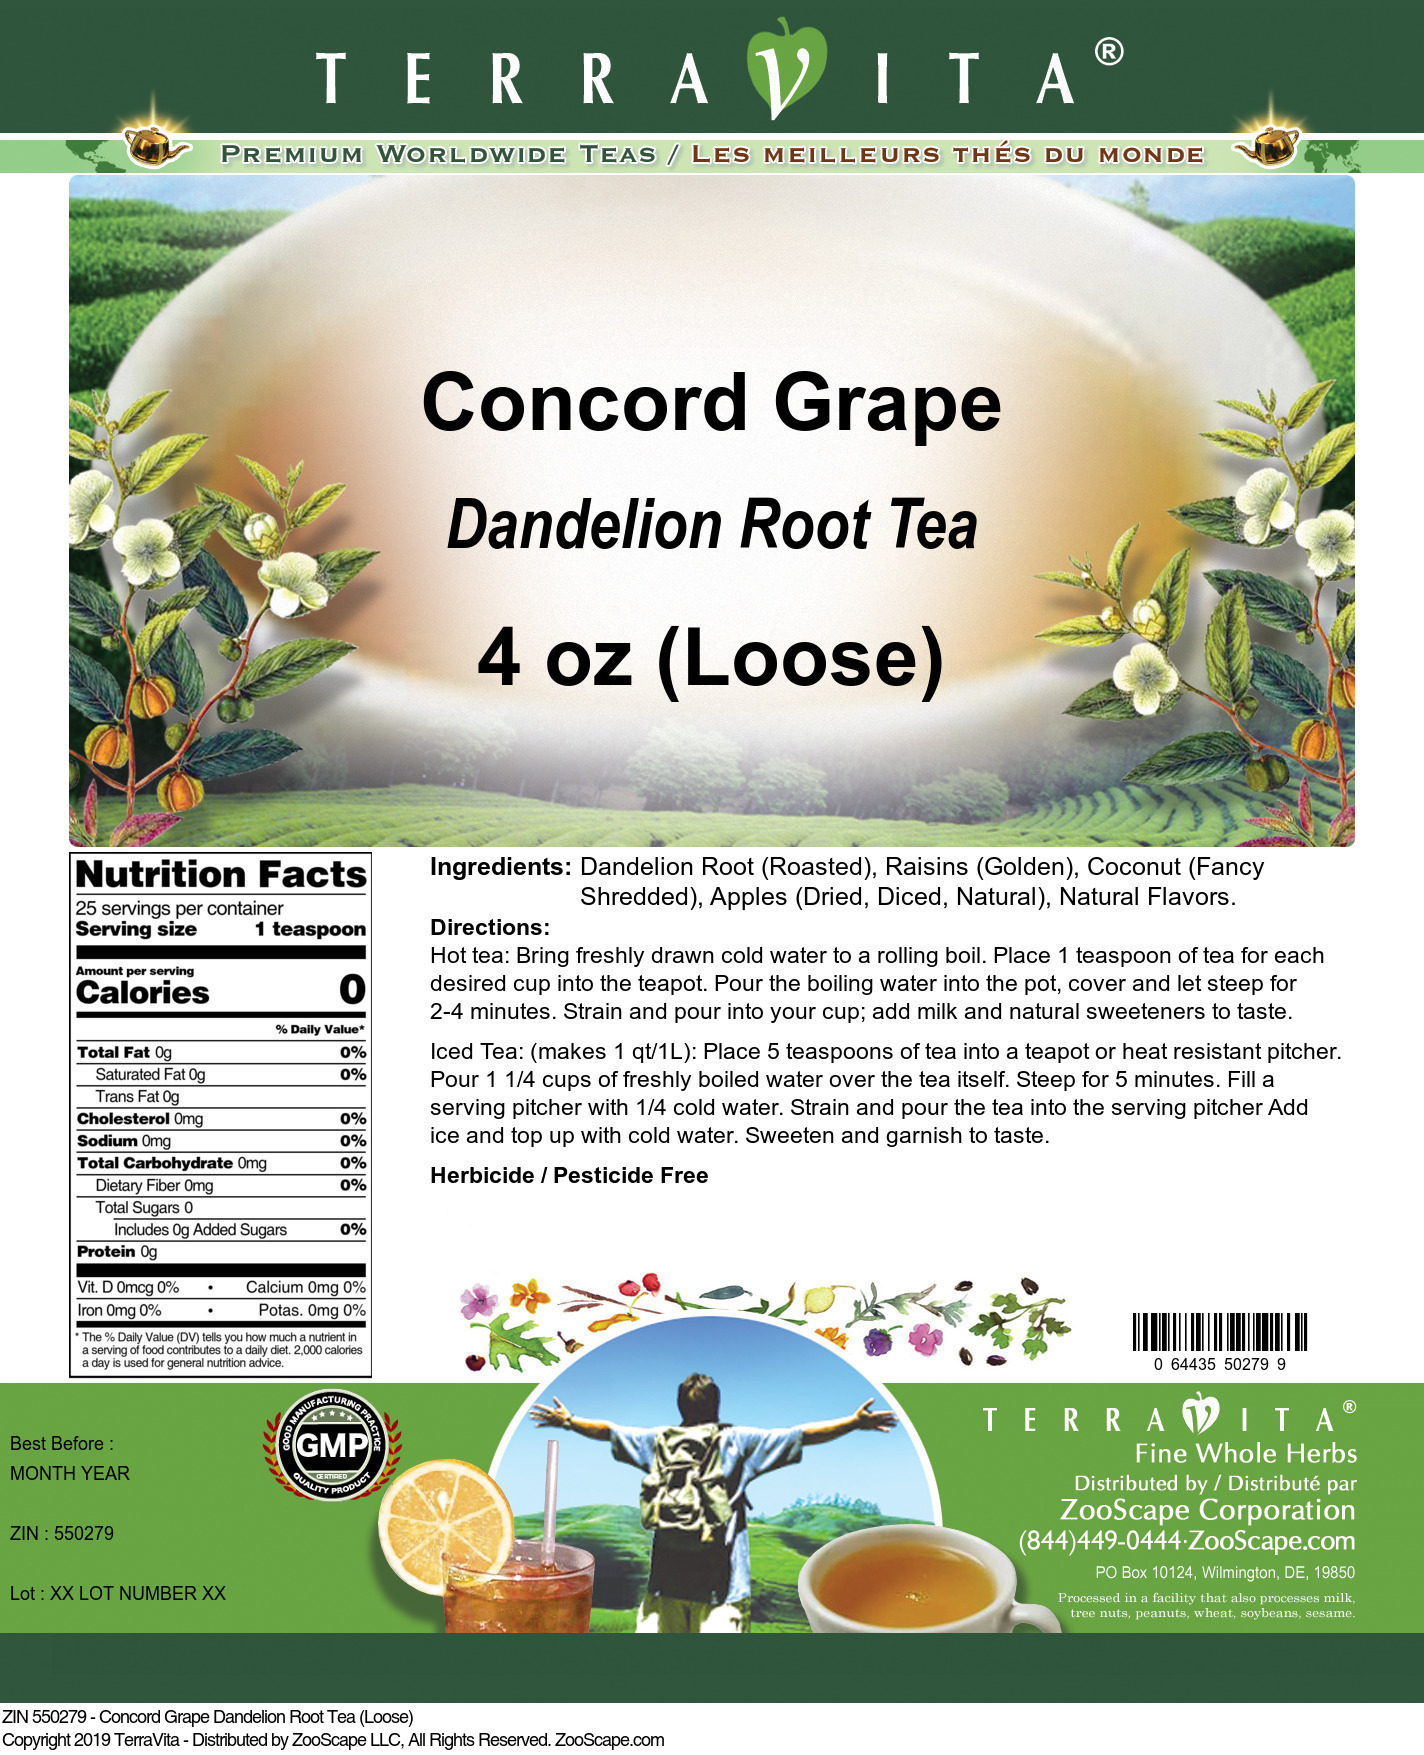 Concord Grape Dandelion Root Tea (Loose) - Label